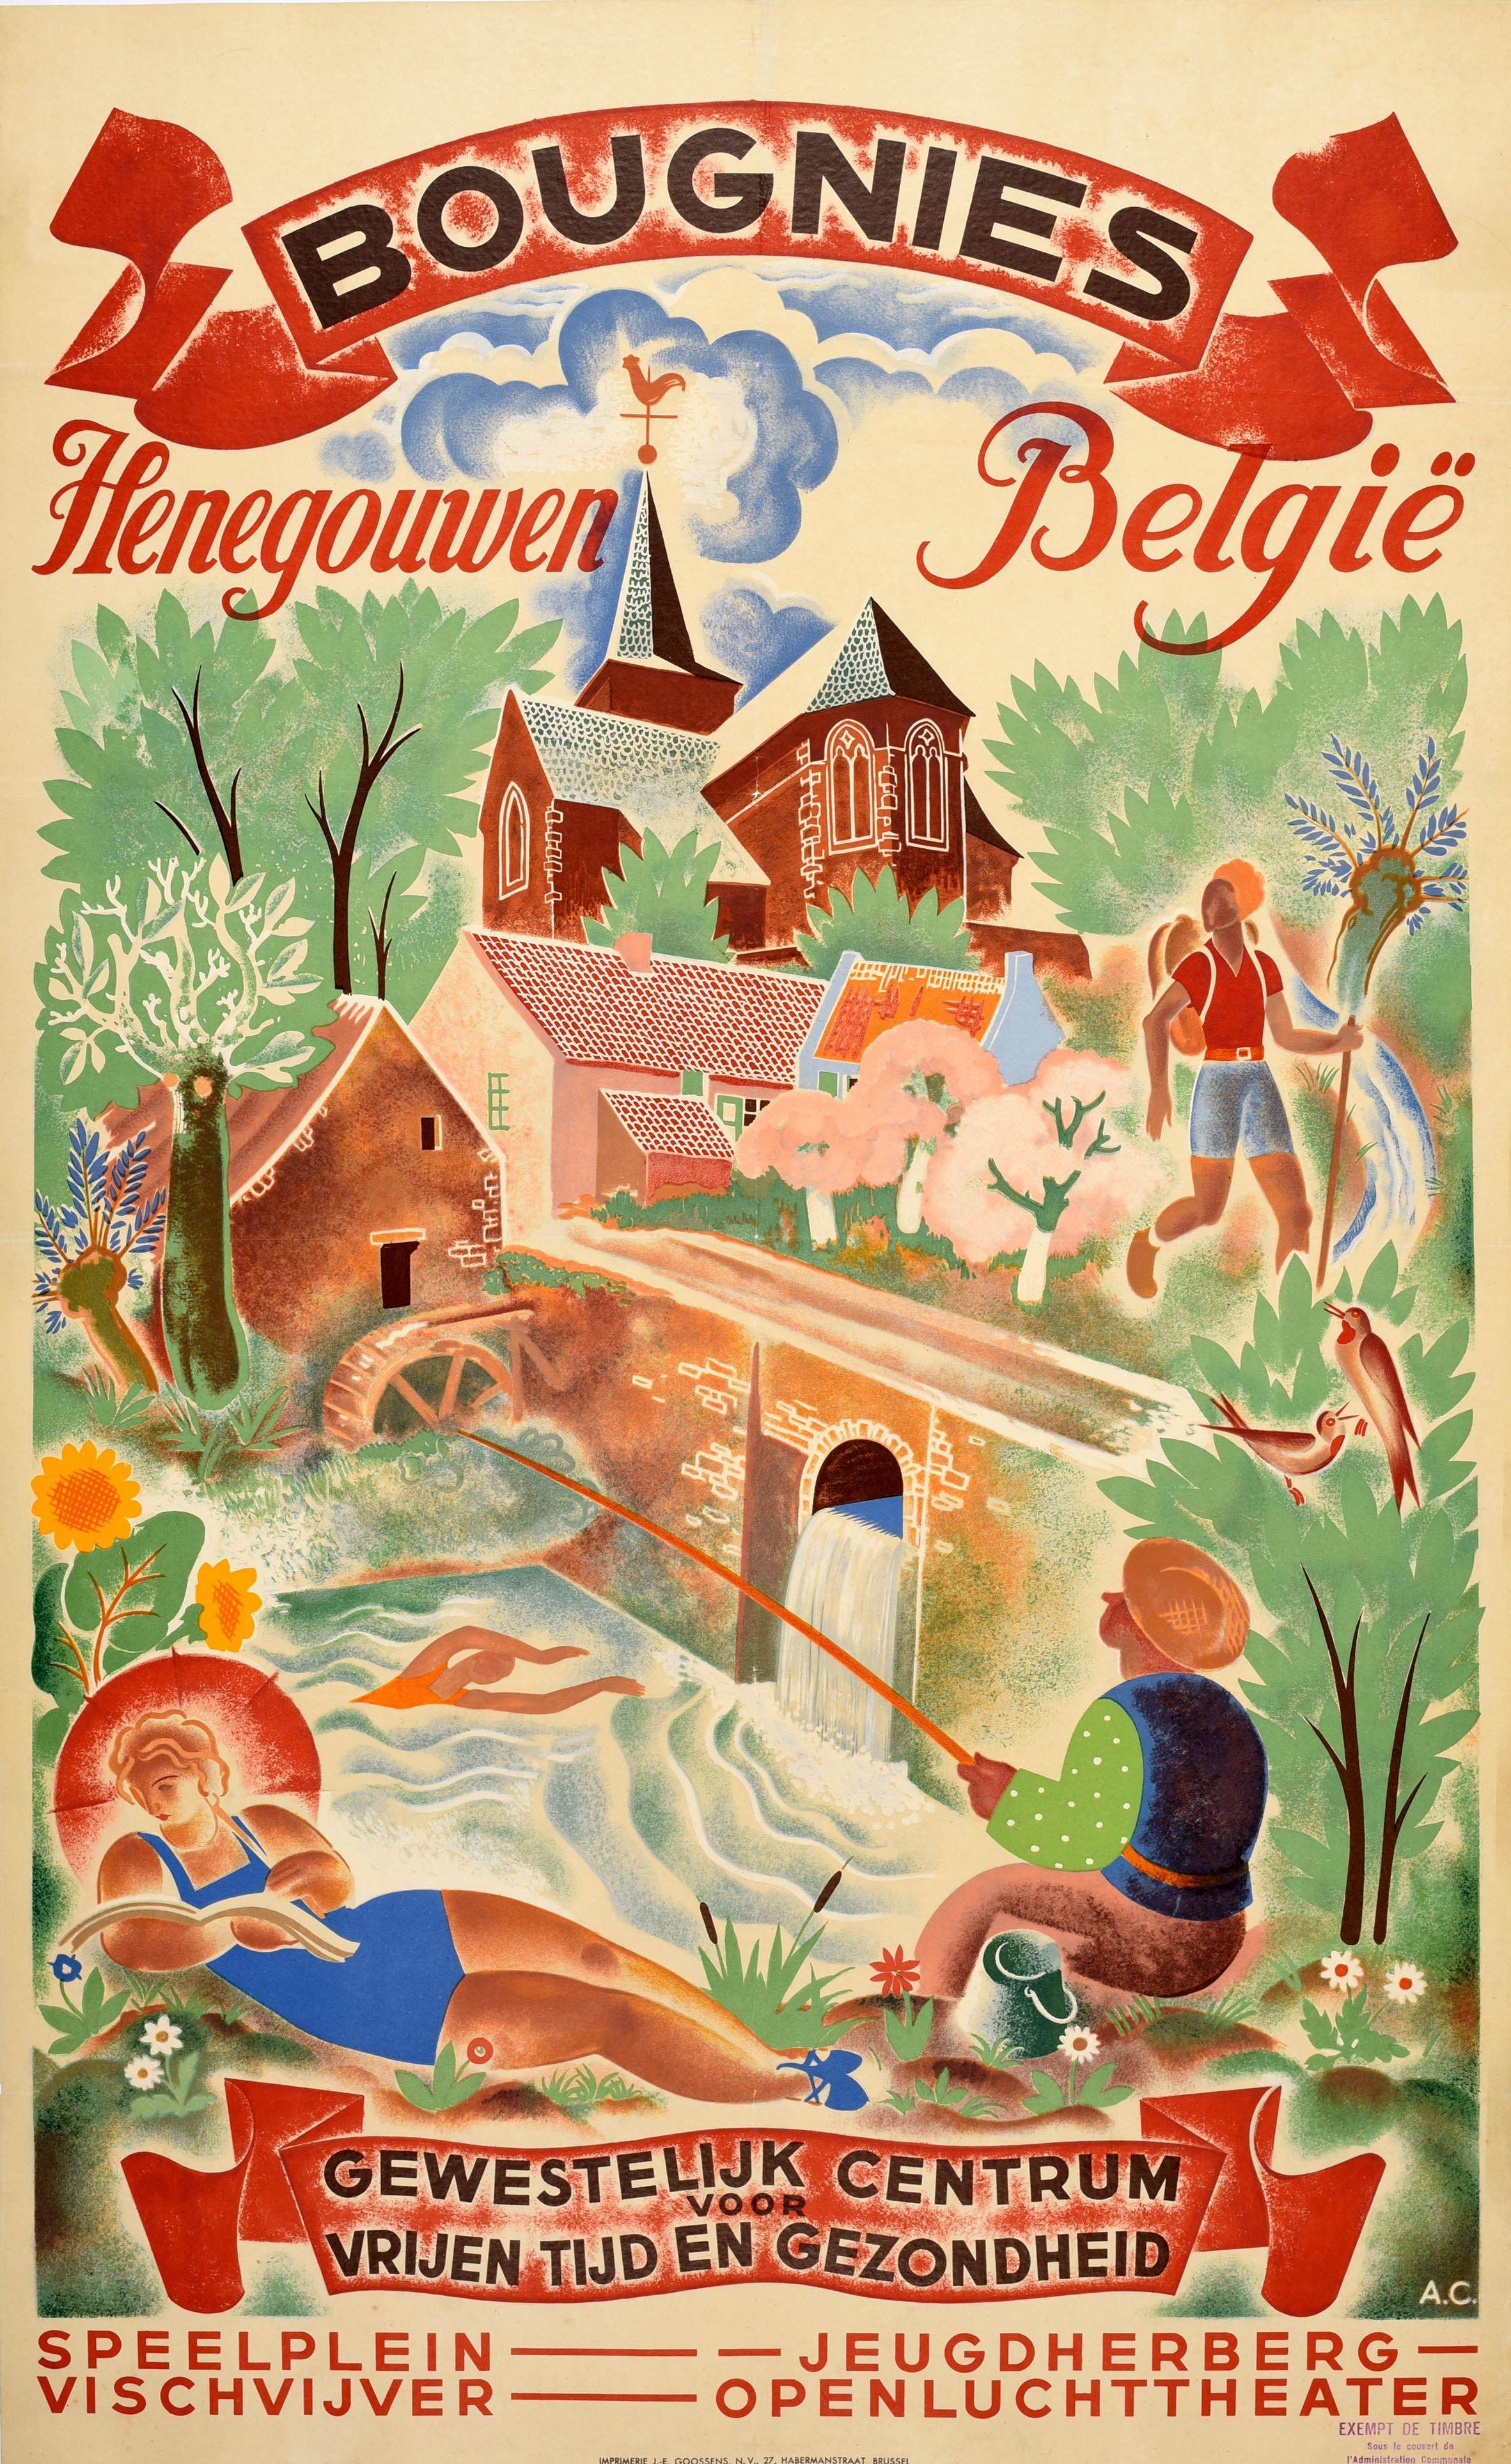 Unknown Print – Original-Vintage-Reiseplakat Bougnies Henegouwen, Belgien, Sport, Reisen